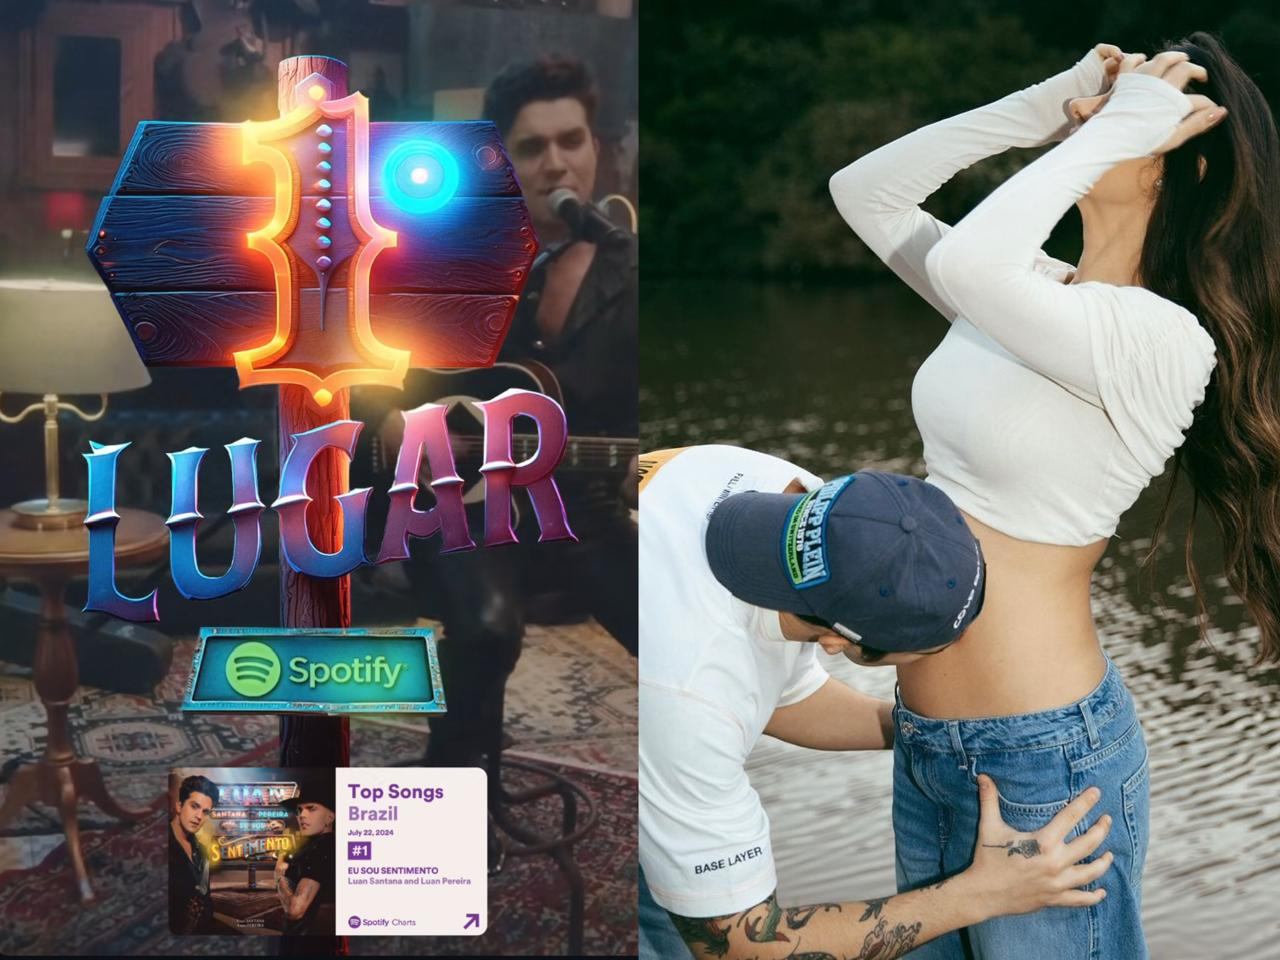 Após anúncio de gravidez, música de Luan Santana chega ao top 1 do Spotify